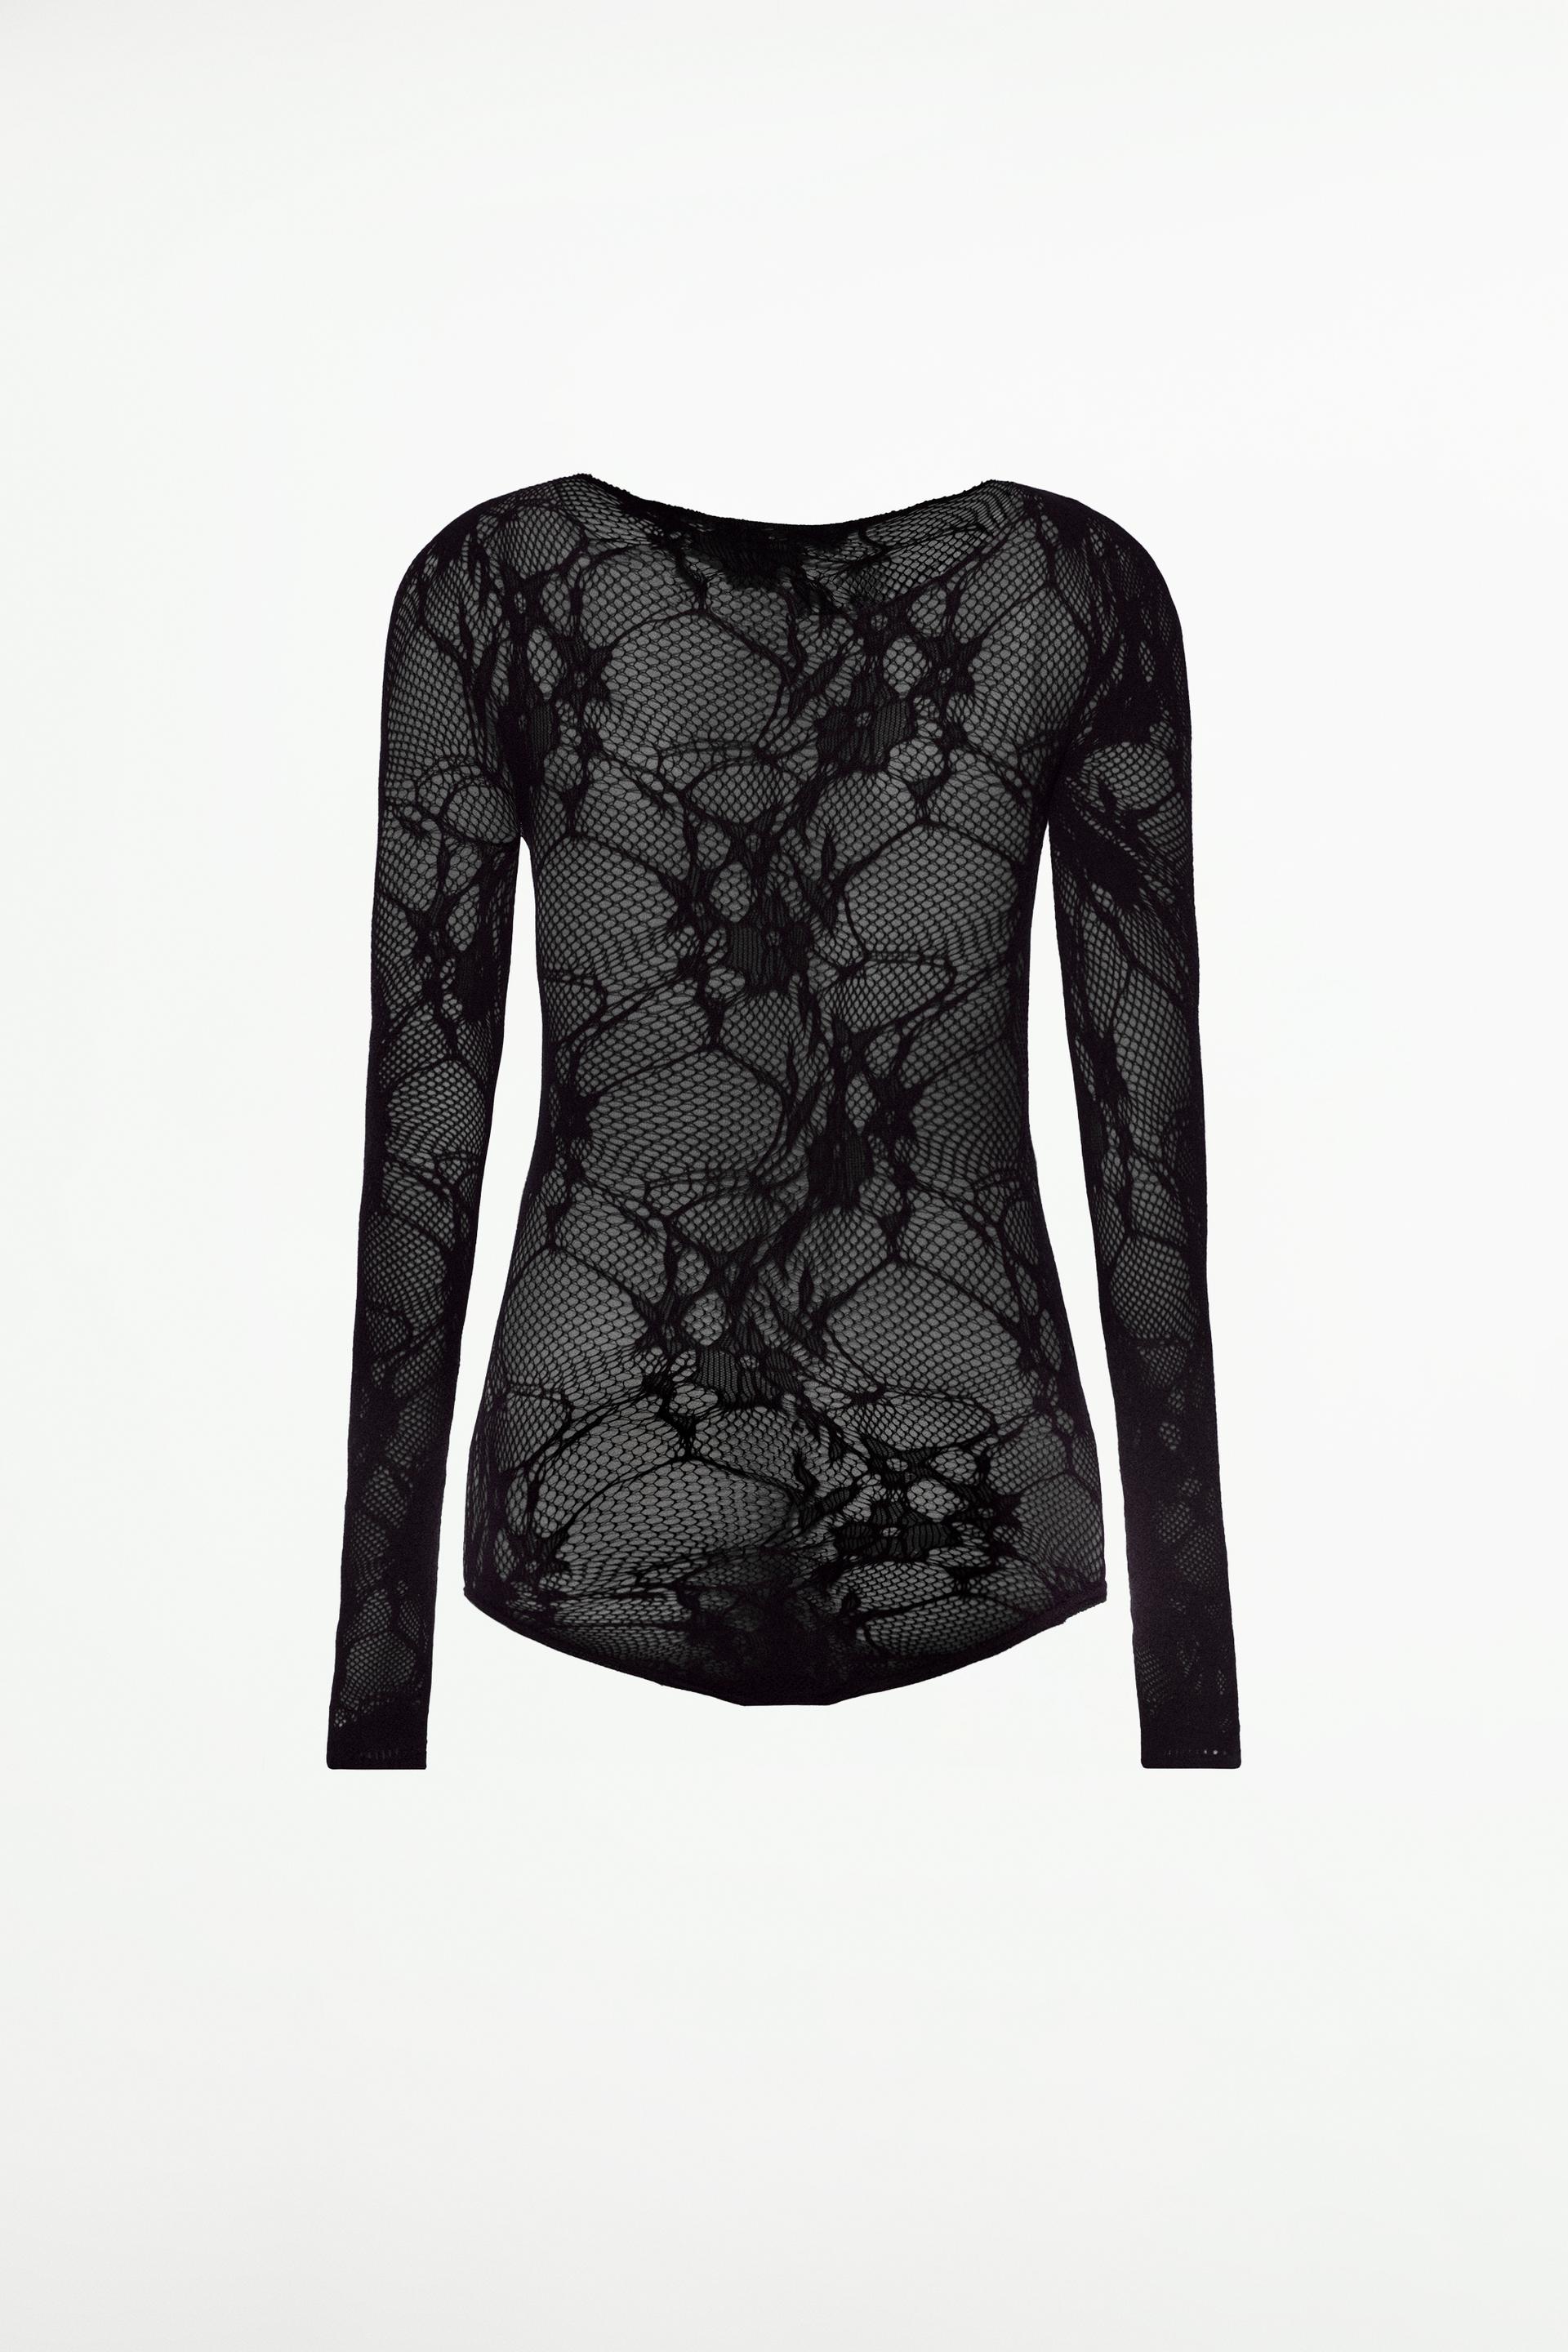 Black Cut-Out Side Lace Sheer Bodysuit - FINAL SALE - ShopperBoard